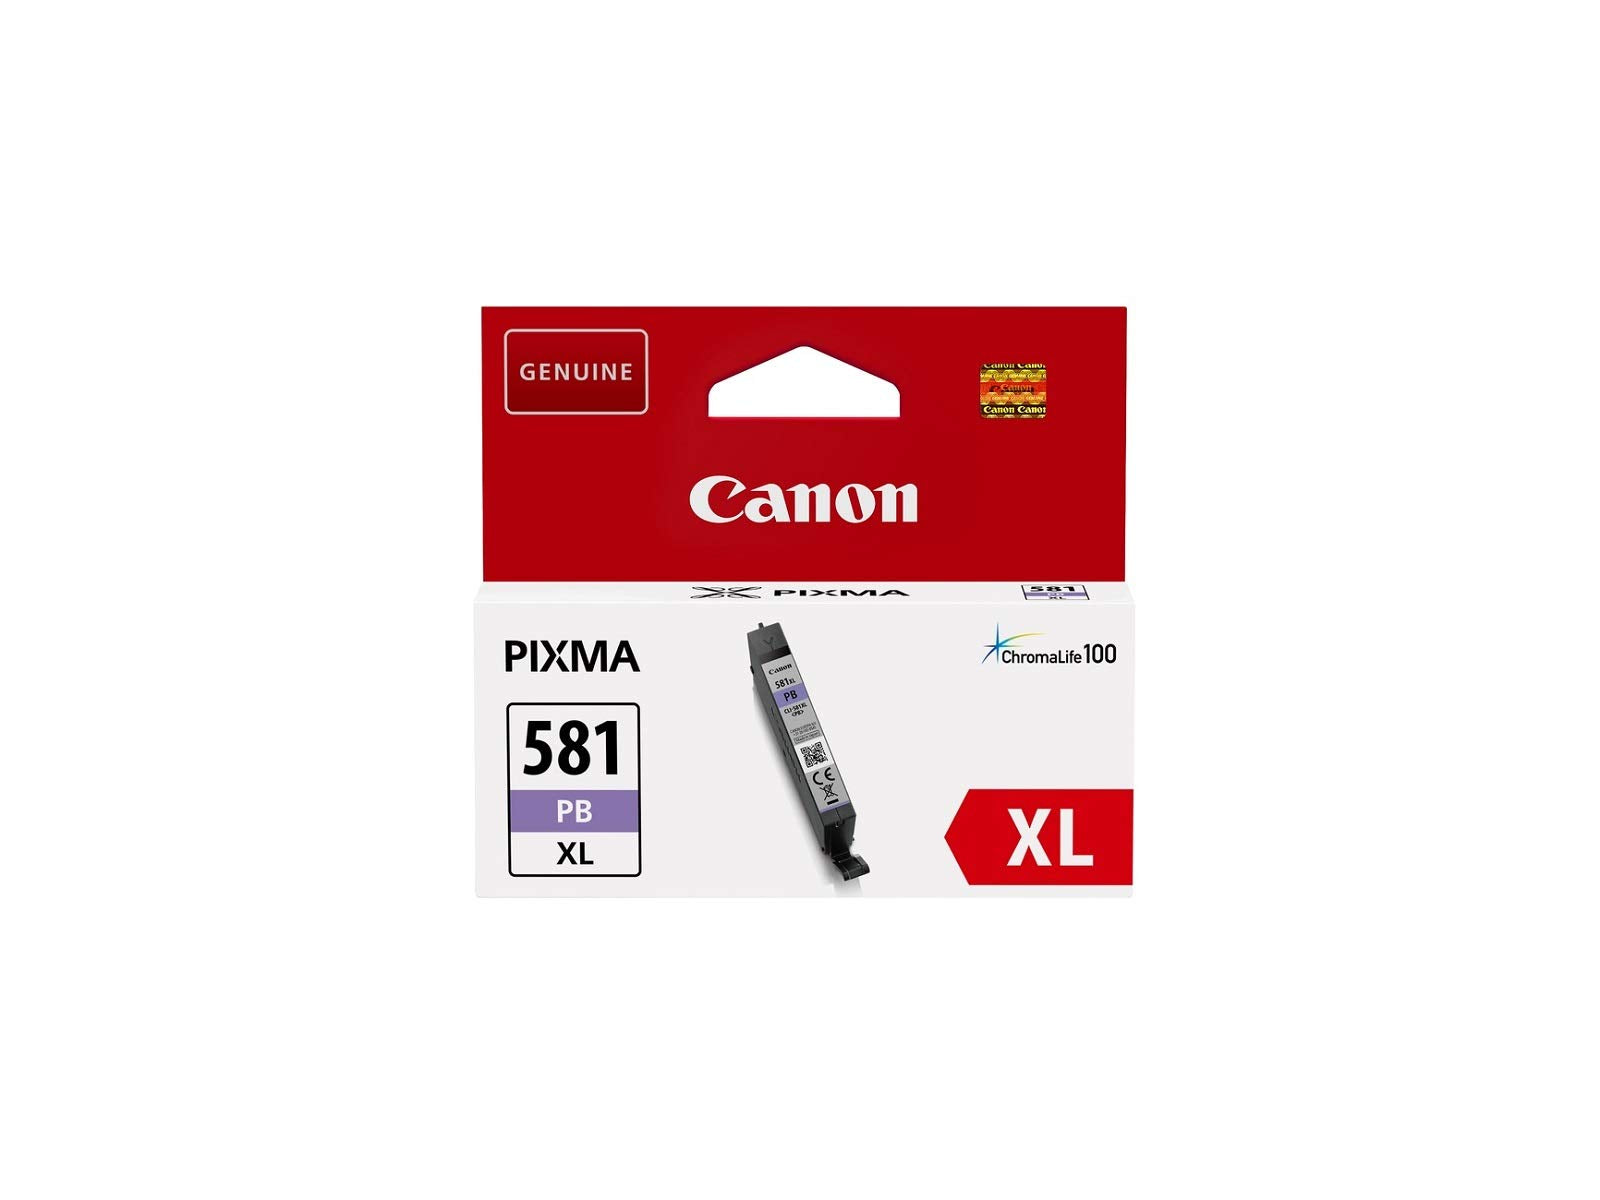 Canon 2053C004 XL Original Inkjet Cartridges - Cyan